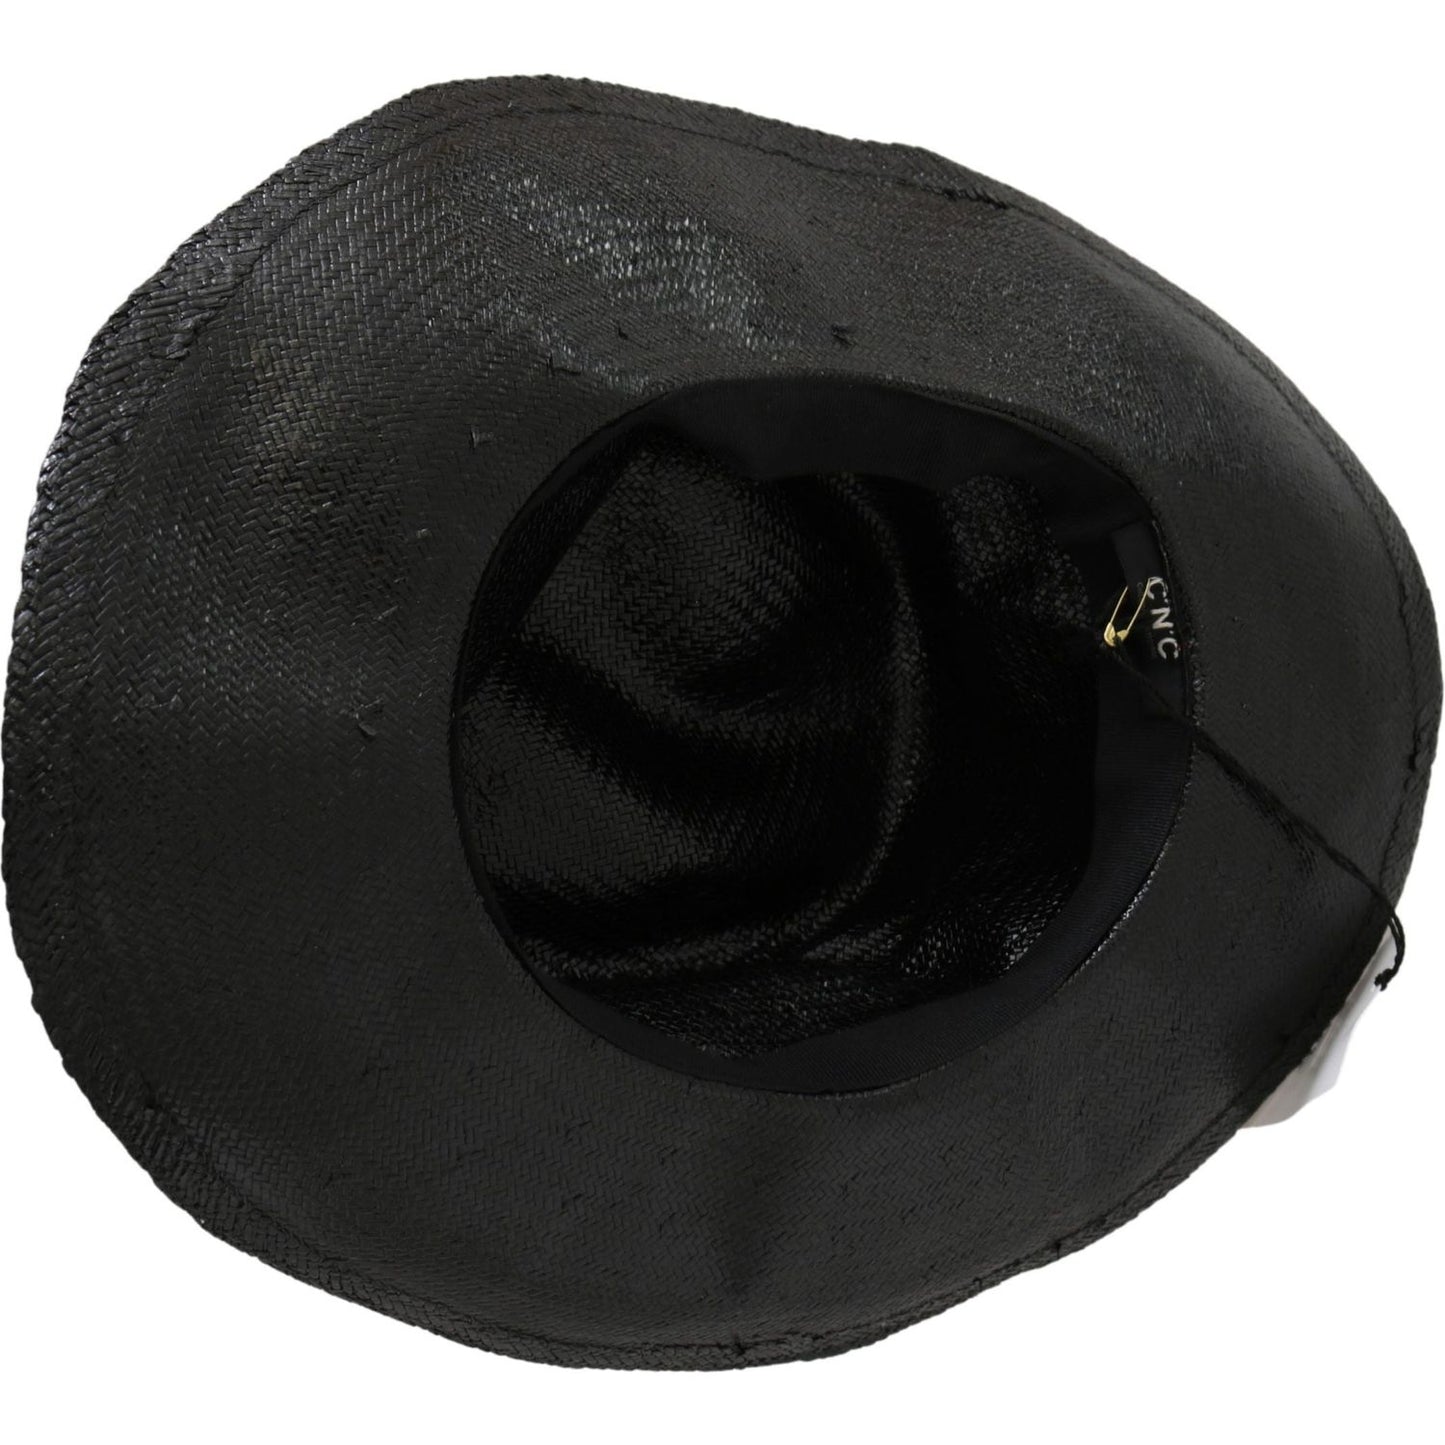 Costume National Chic Black Floppy Hat - Timeless Elegance black-wide-brim-cowboy-solid-hat Hat IMG_0923-scaled-6edfaafb-6d5.jpg